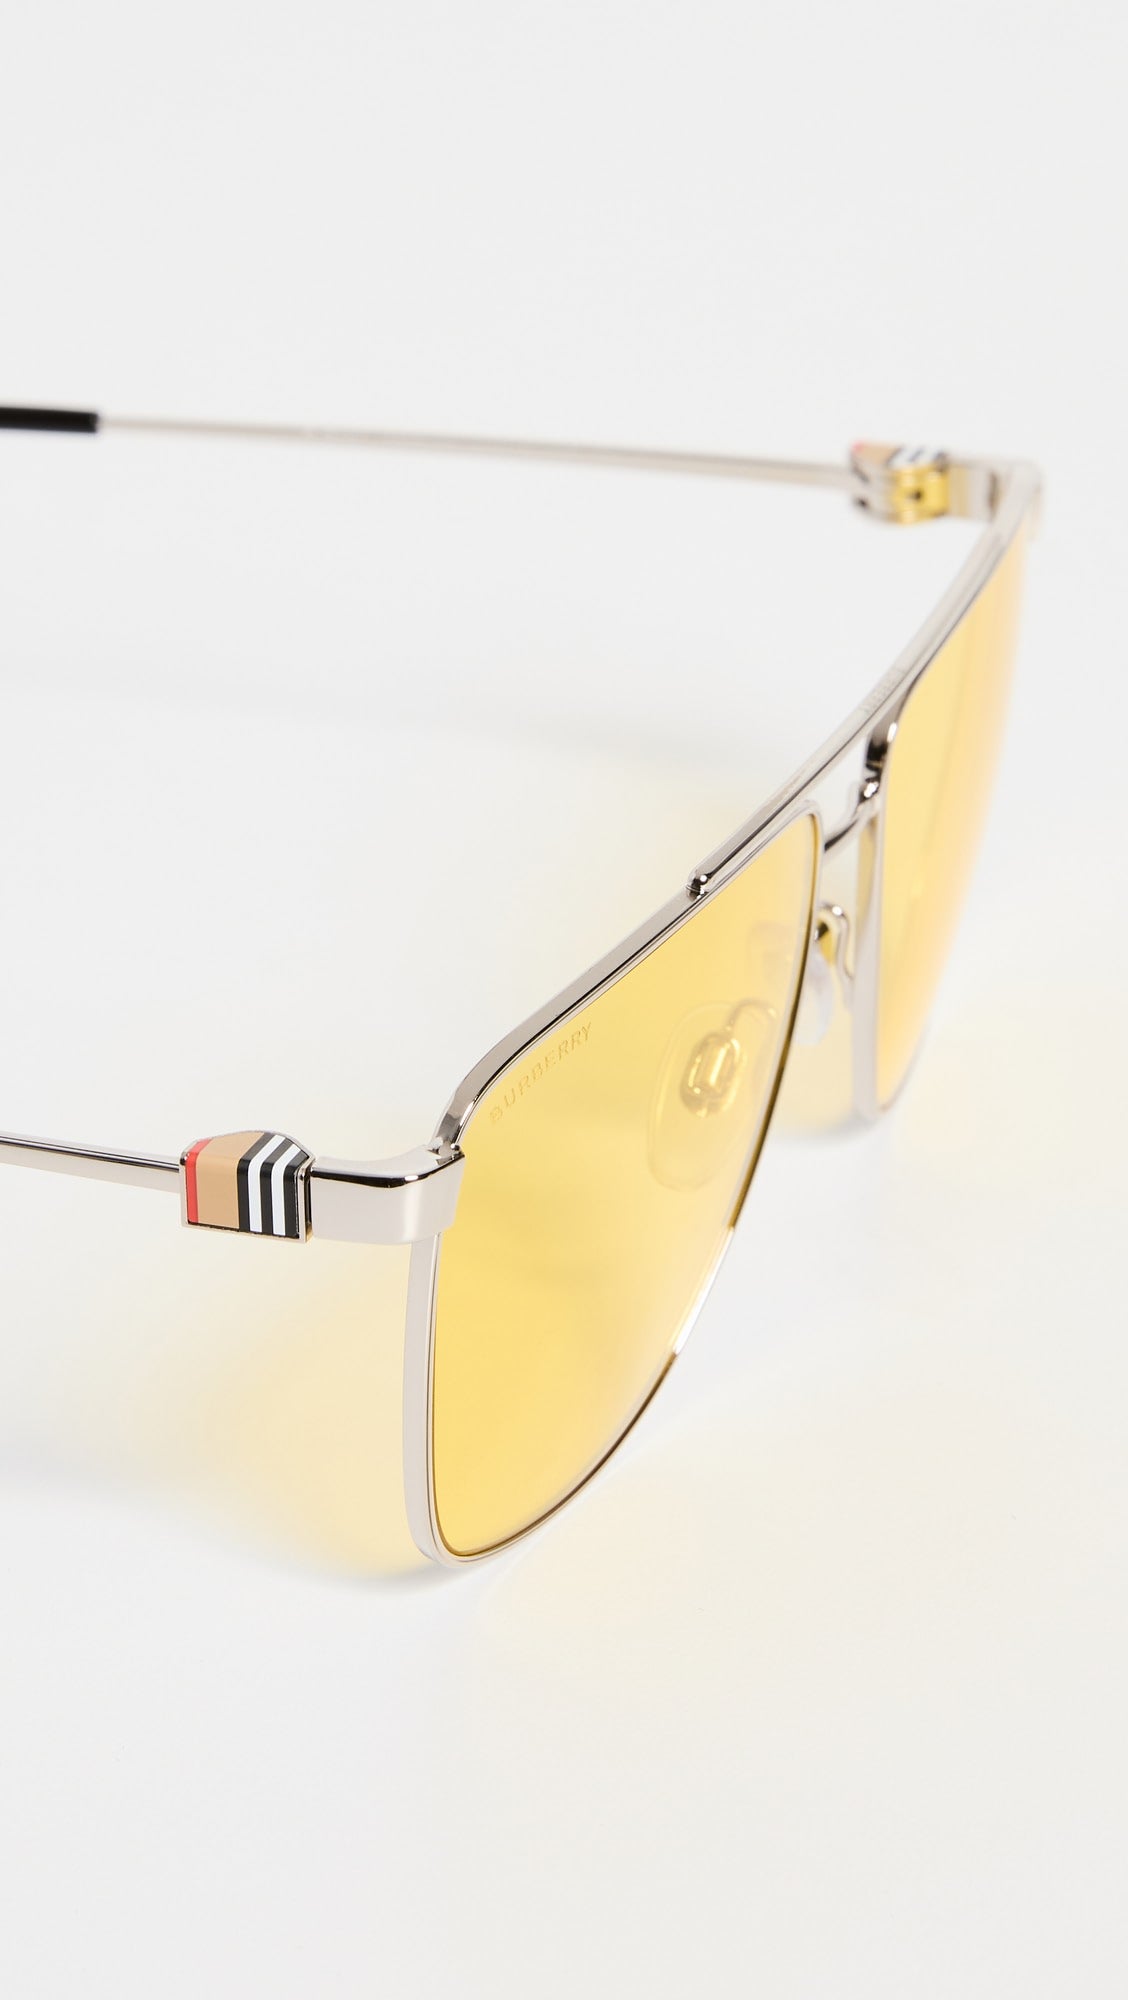 Burberry BE3141-100585-61 61mm New Sunglasses